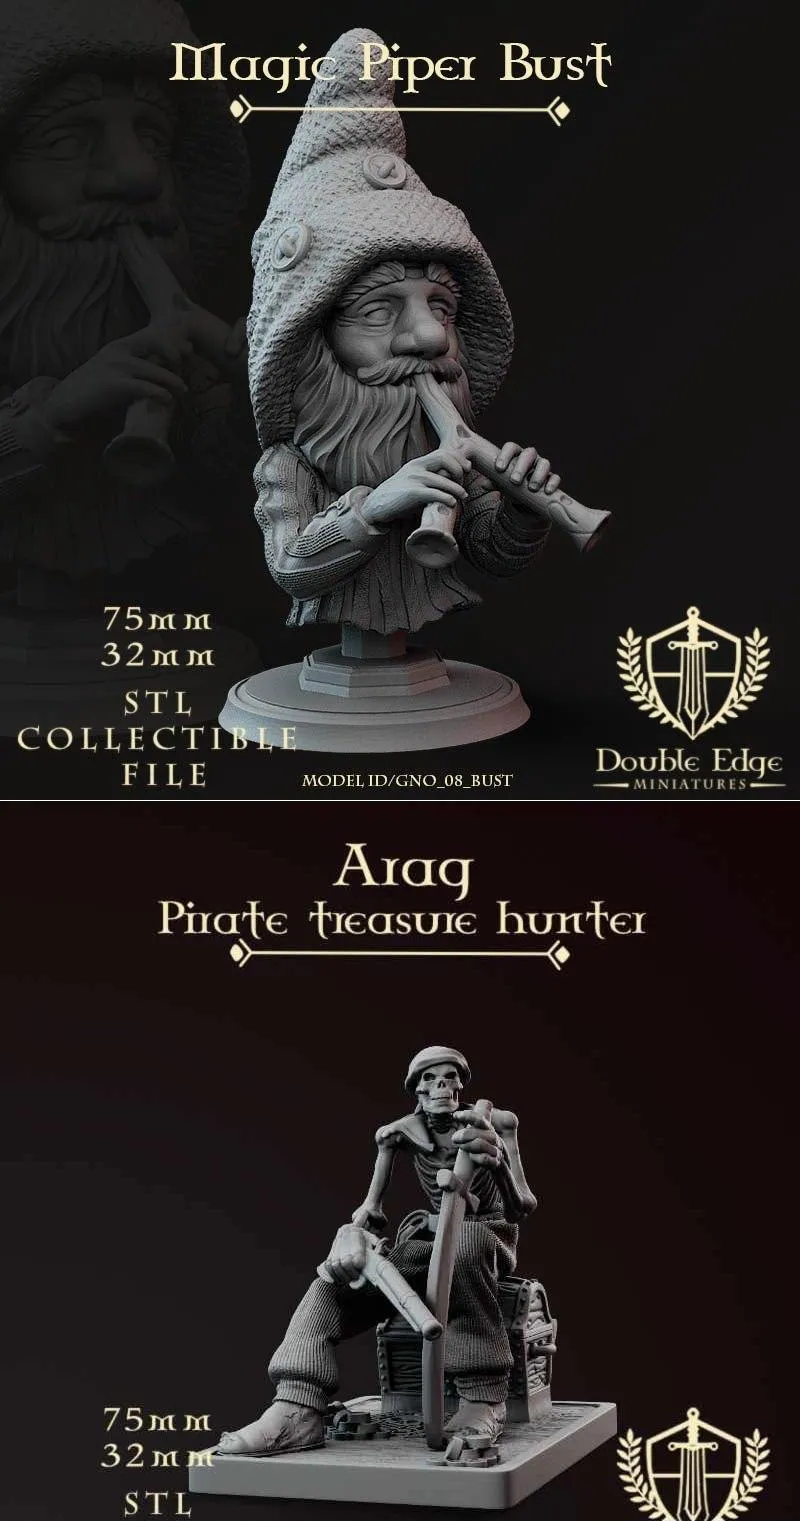 Double Edge - Magic Piper Bust and Arag pirate treasure hunter